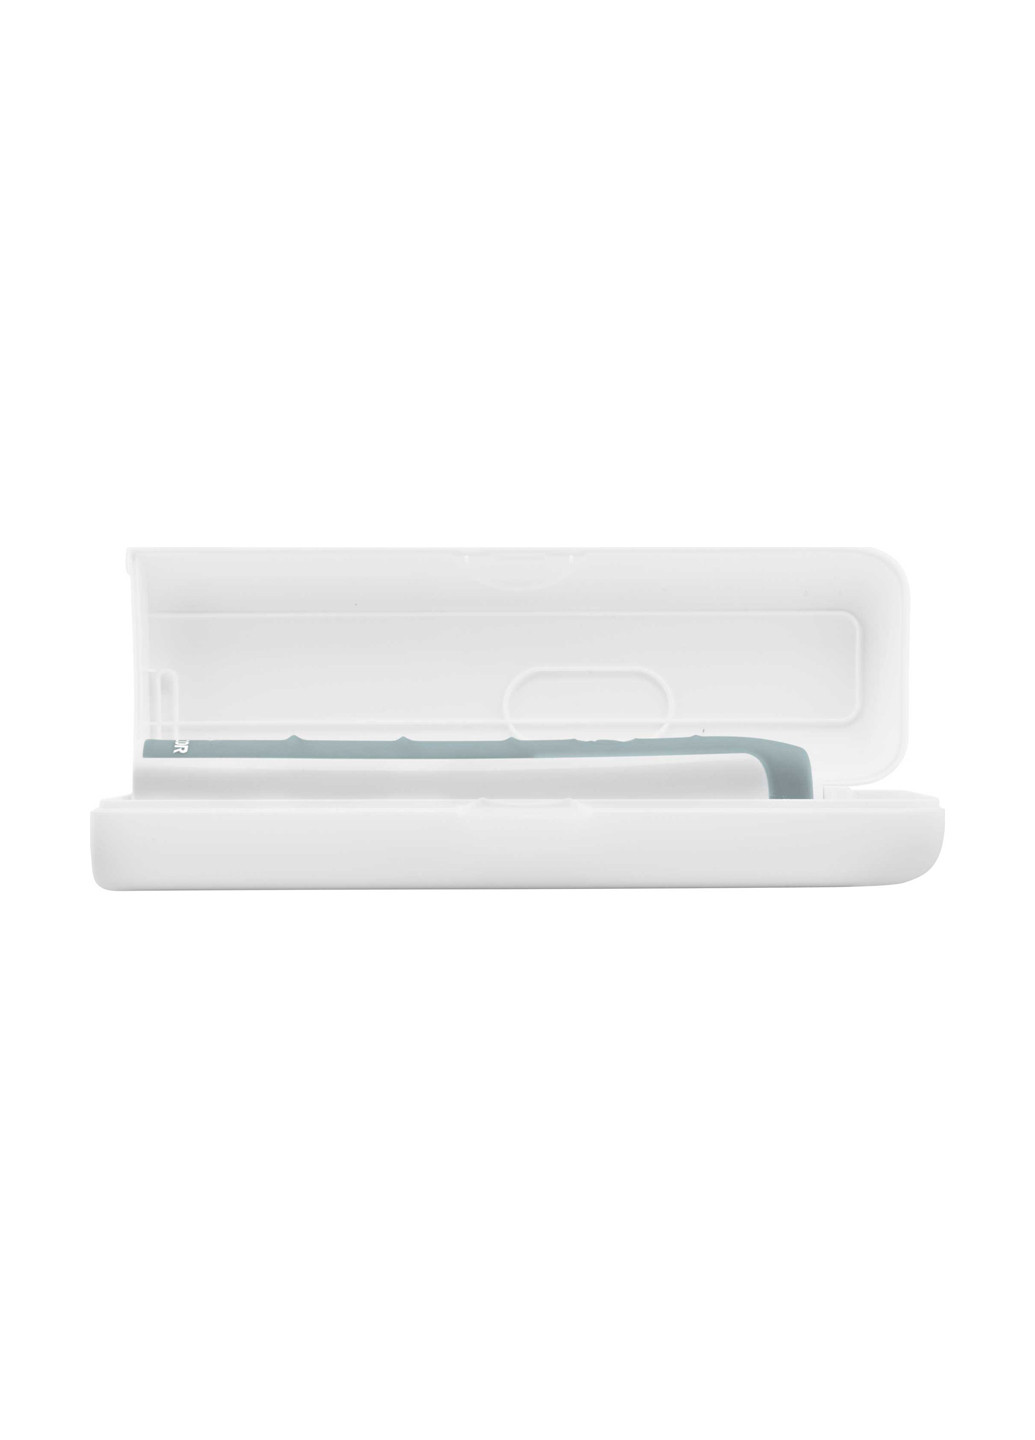 Електрична зубна щітка Sencor soc 1100 sl (130617754)